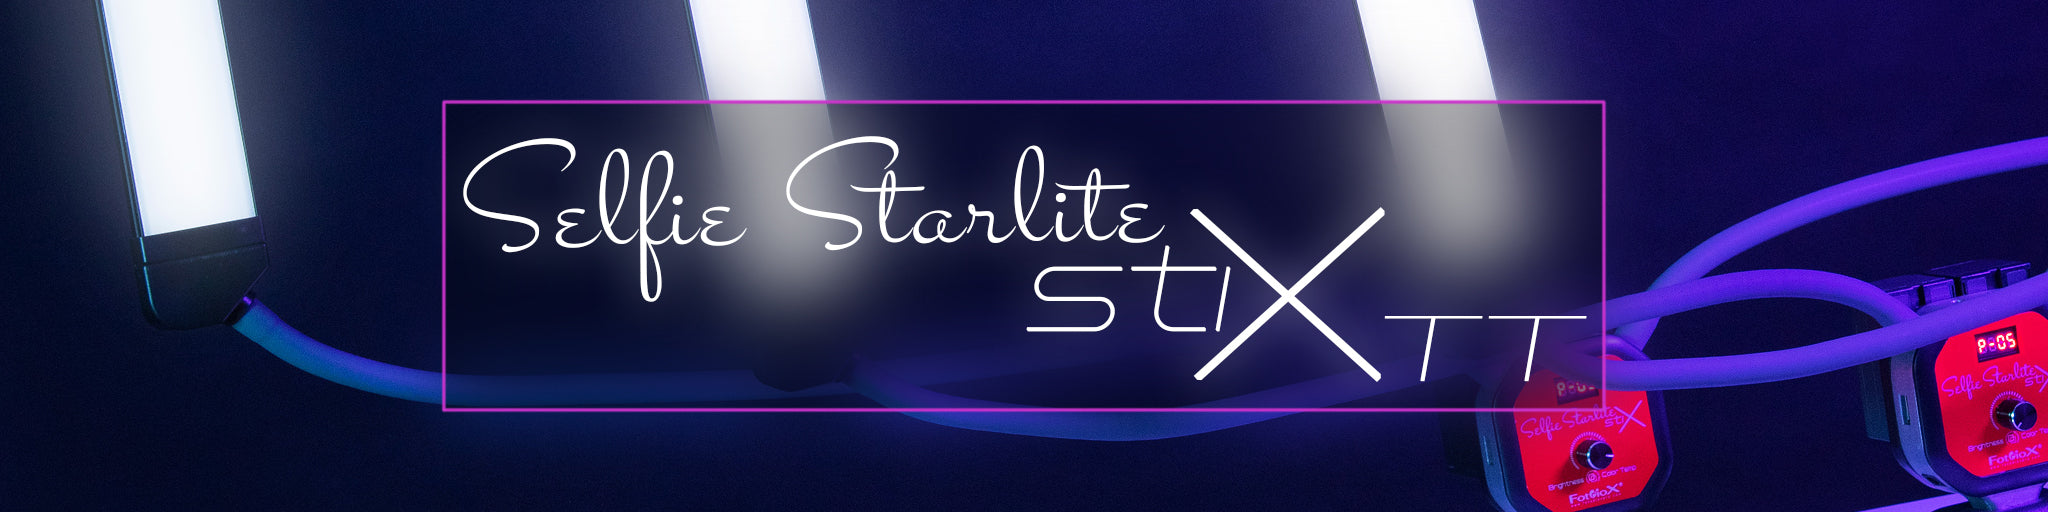 Selfie Starlite Stix TT Our Tabletop Vlog Light